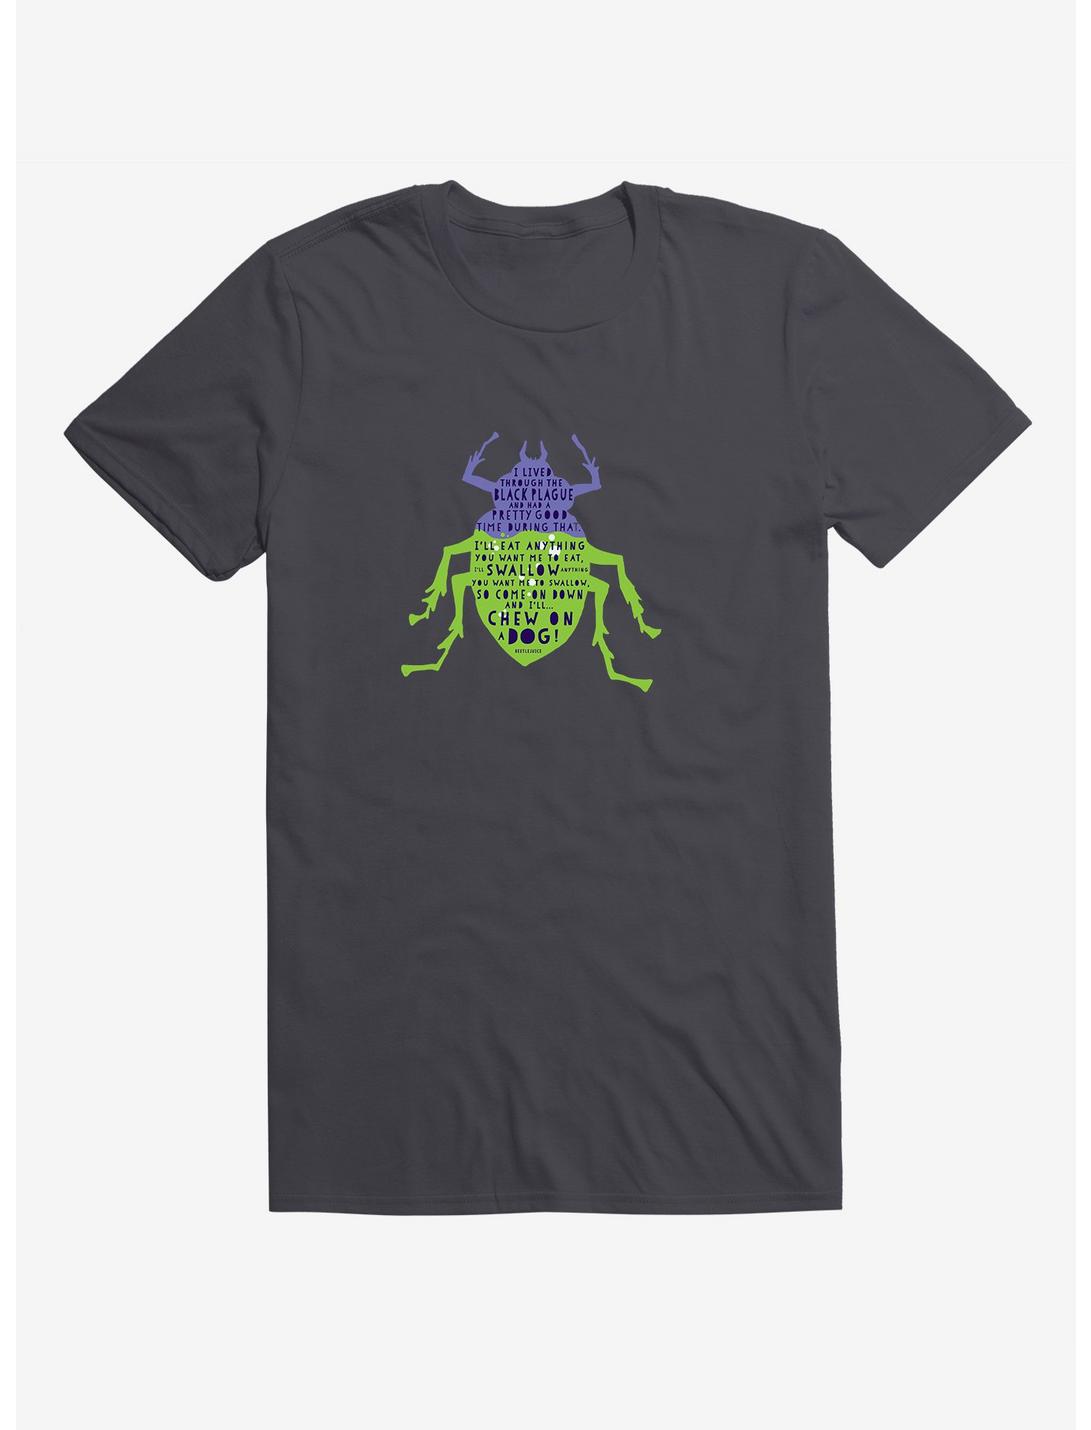 Beetlejuice Beetle Grey T-Shirt, CHARCOAL, hi-res